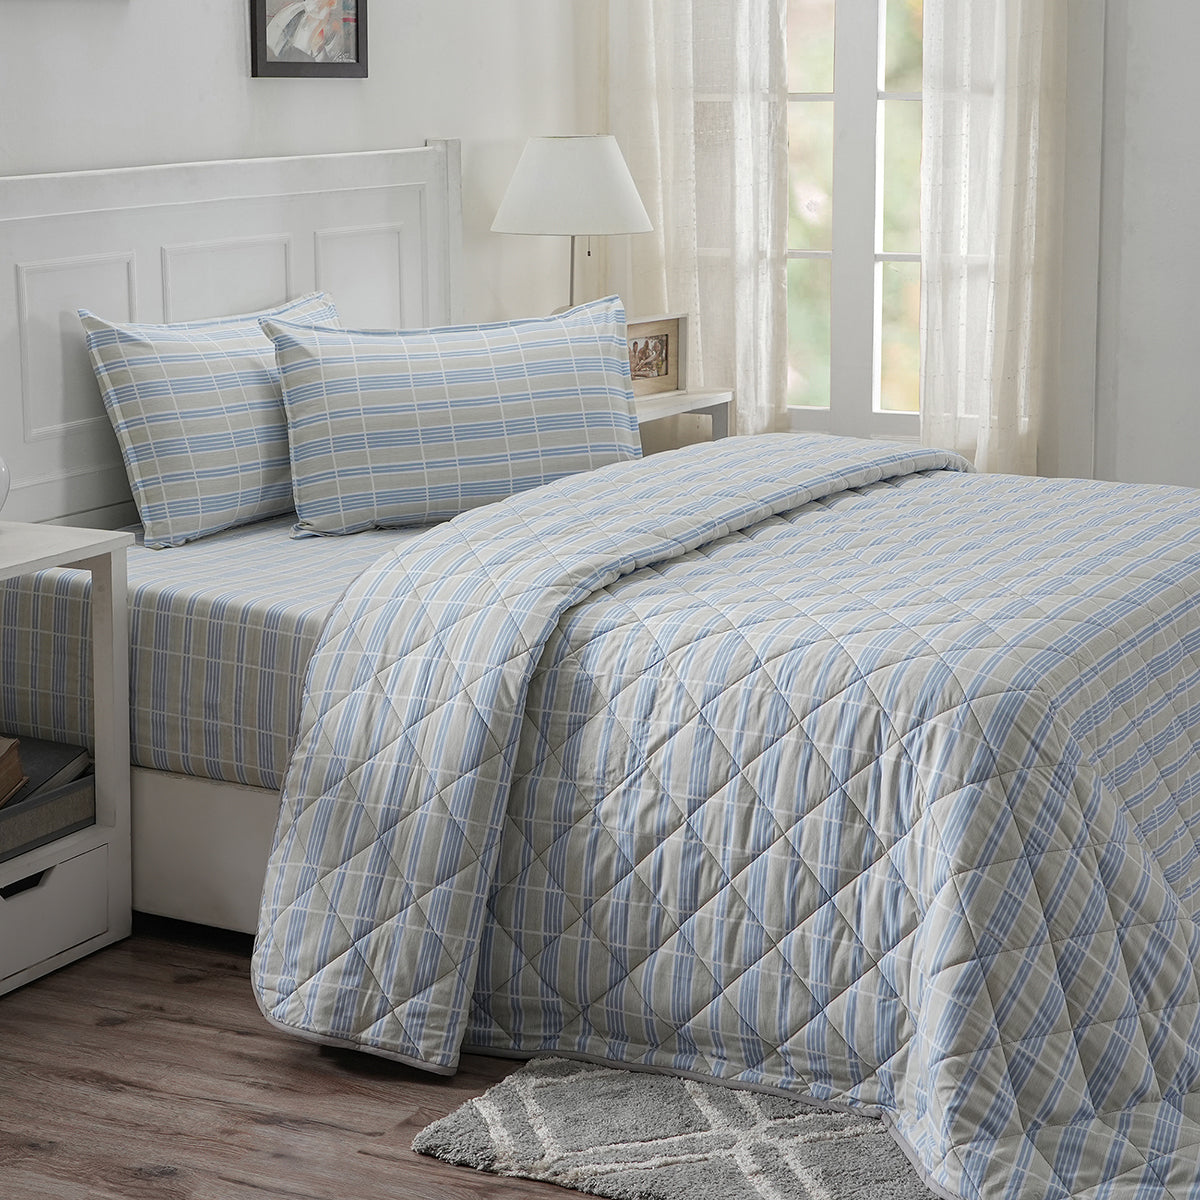 Optimist Bloom Berne 4PC Quilt/Quilted Bed Cover Set